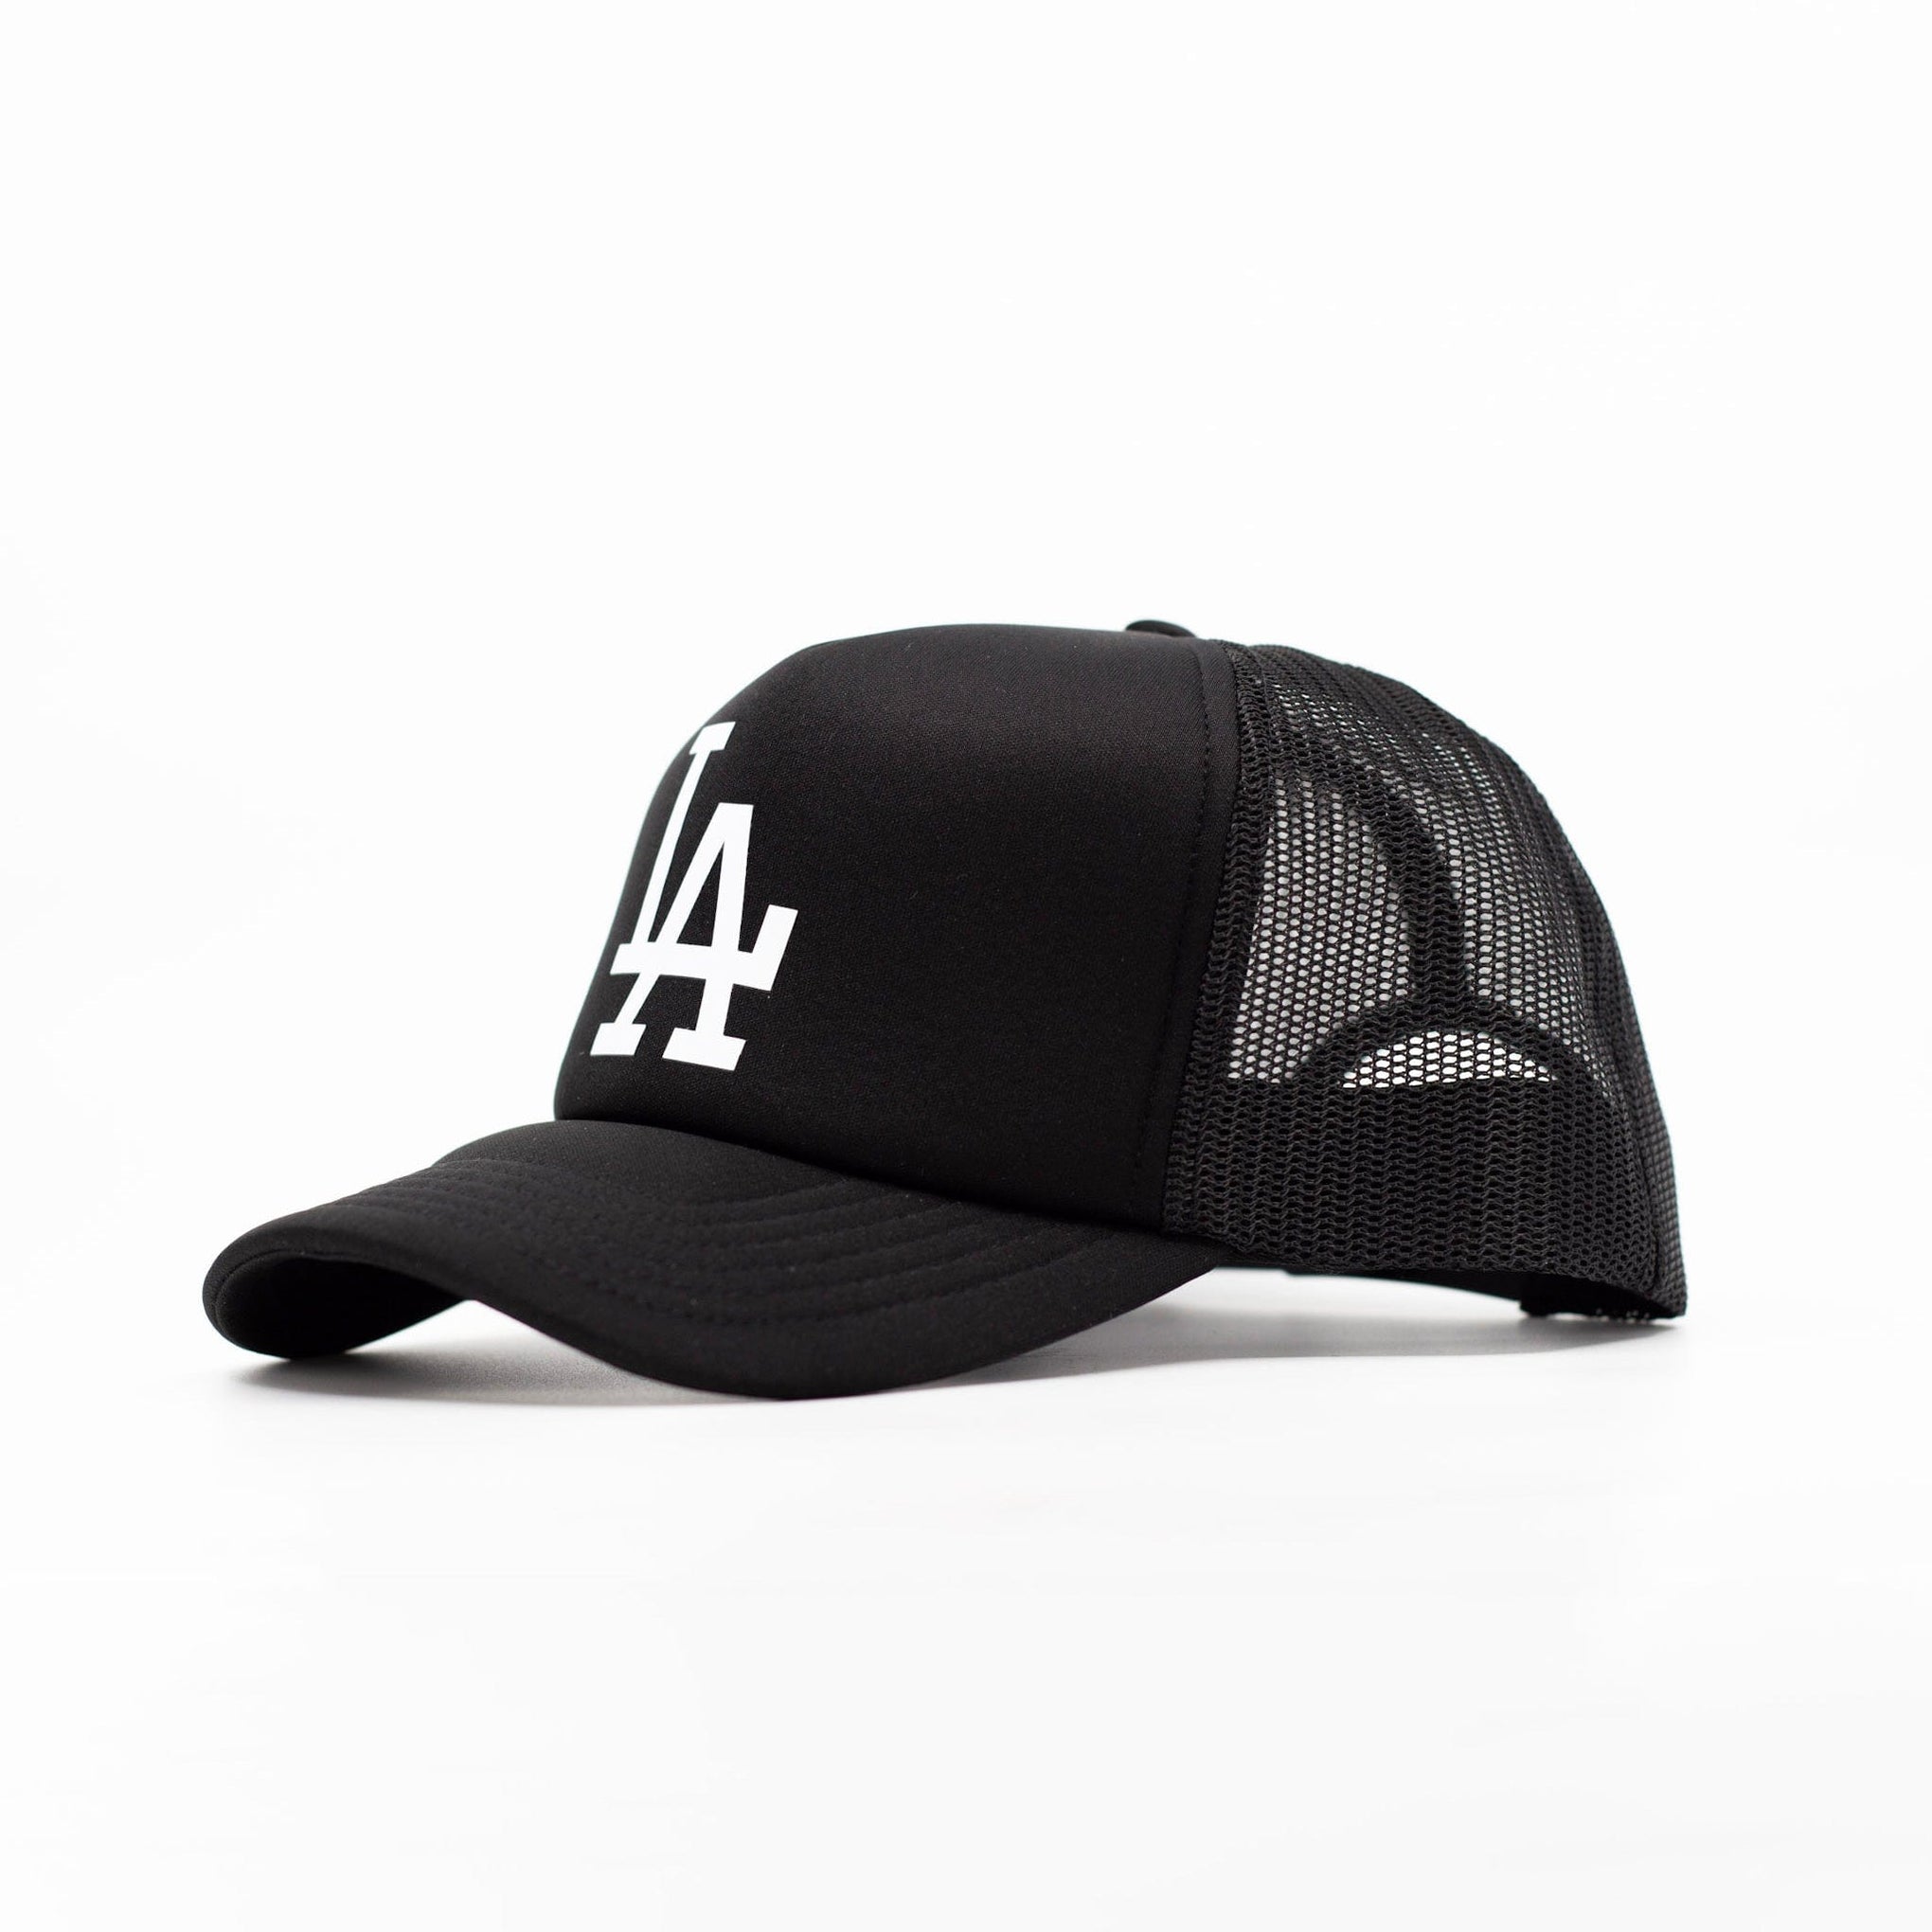 Black/white LA mesh cap